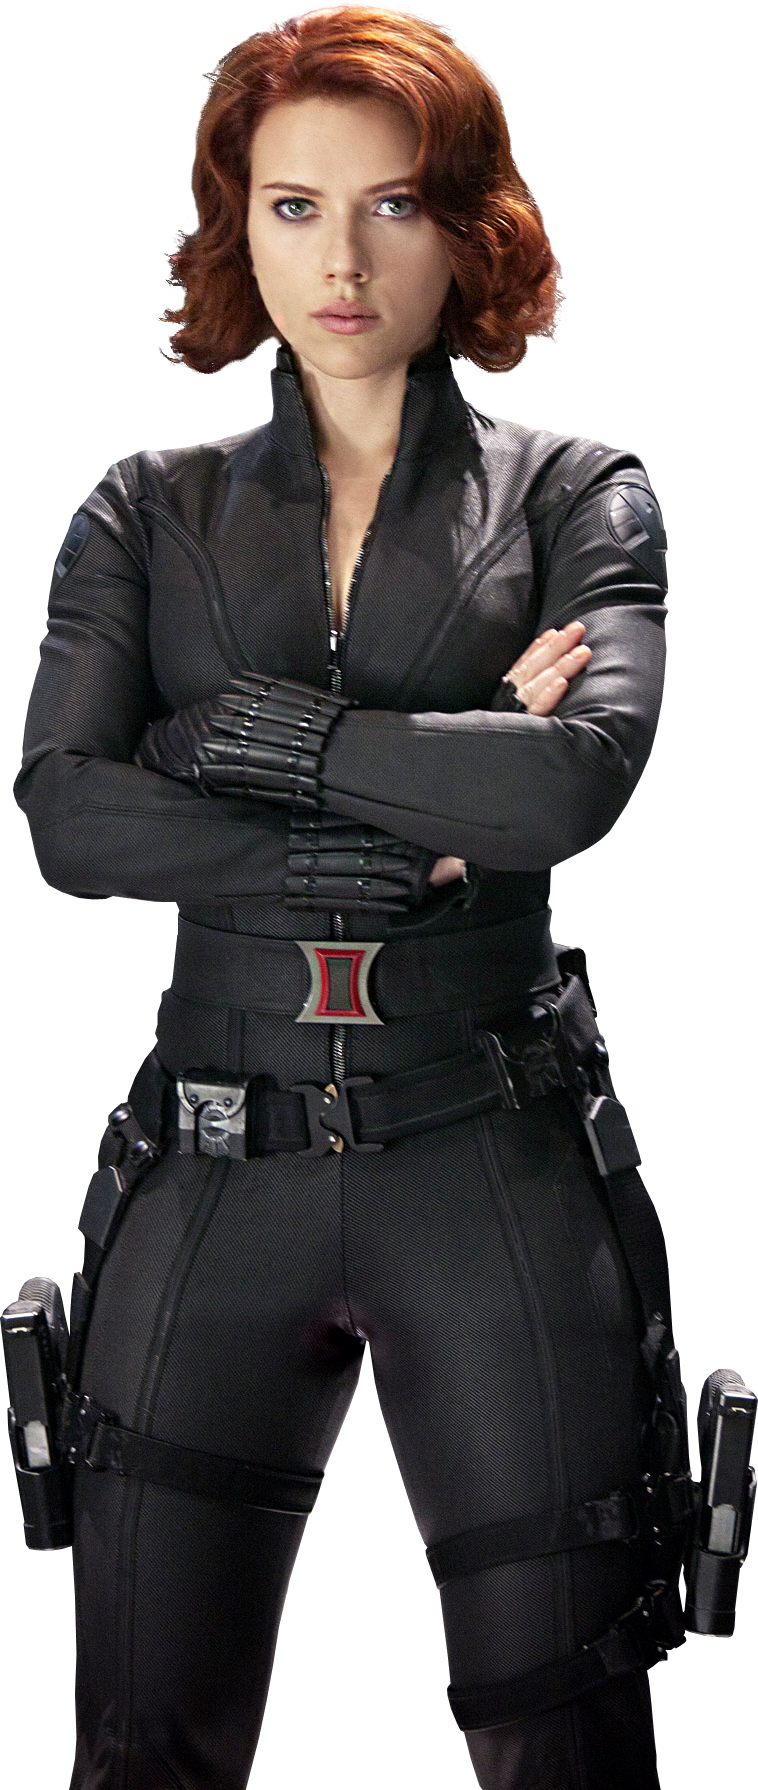 Black Widow Standing Pose PNG image